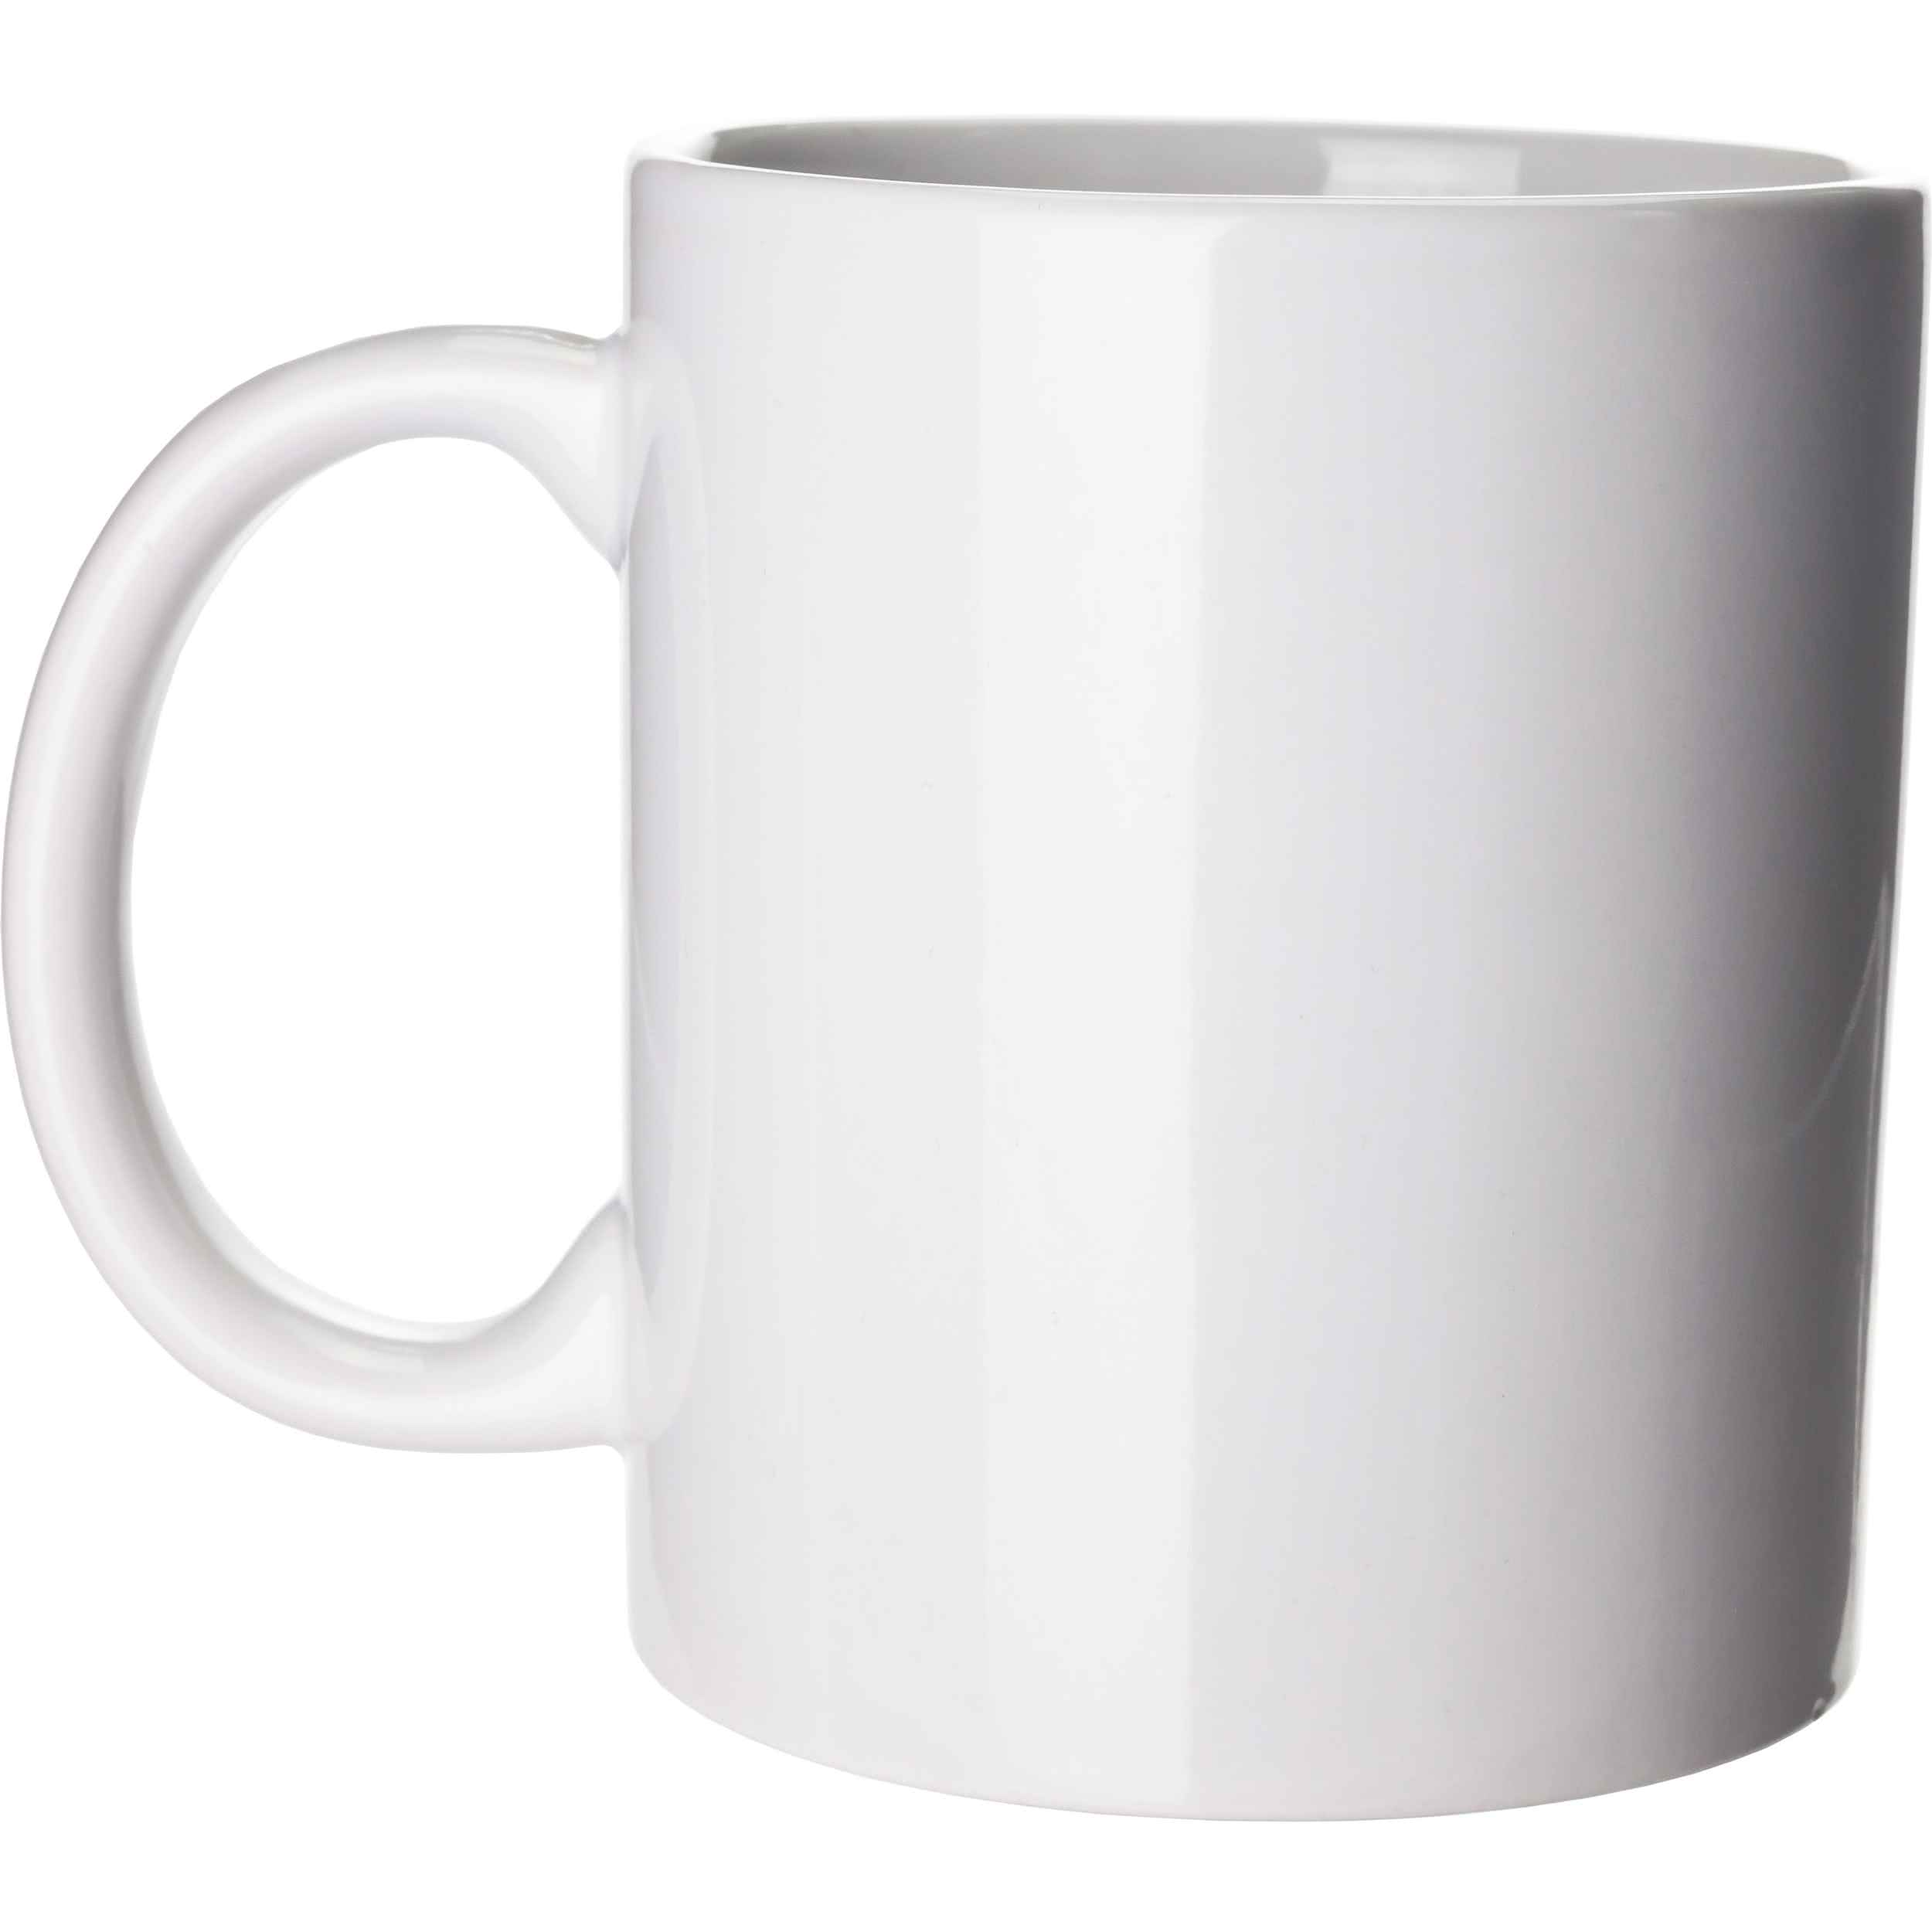 Promotional 11 Oz. Budget Coffee Mugs with Custom Logo for $0.96 Ea.